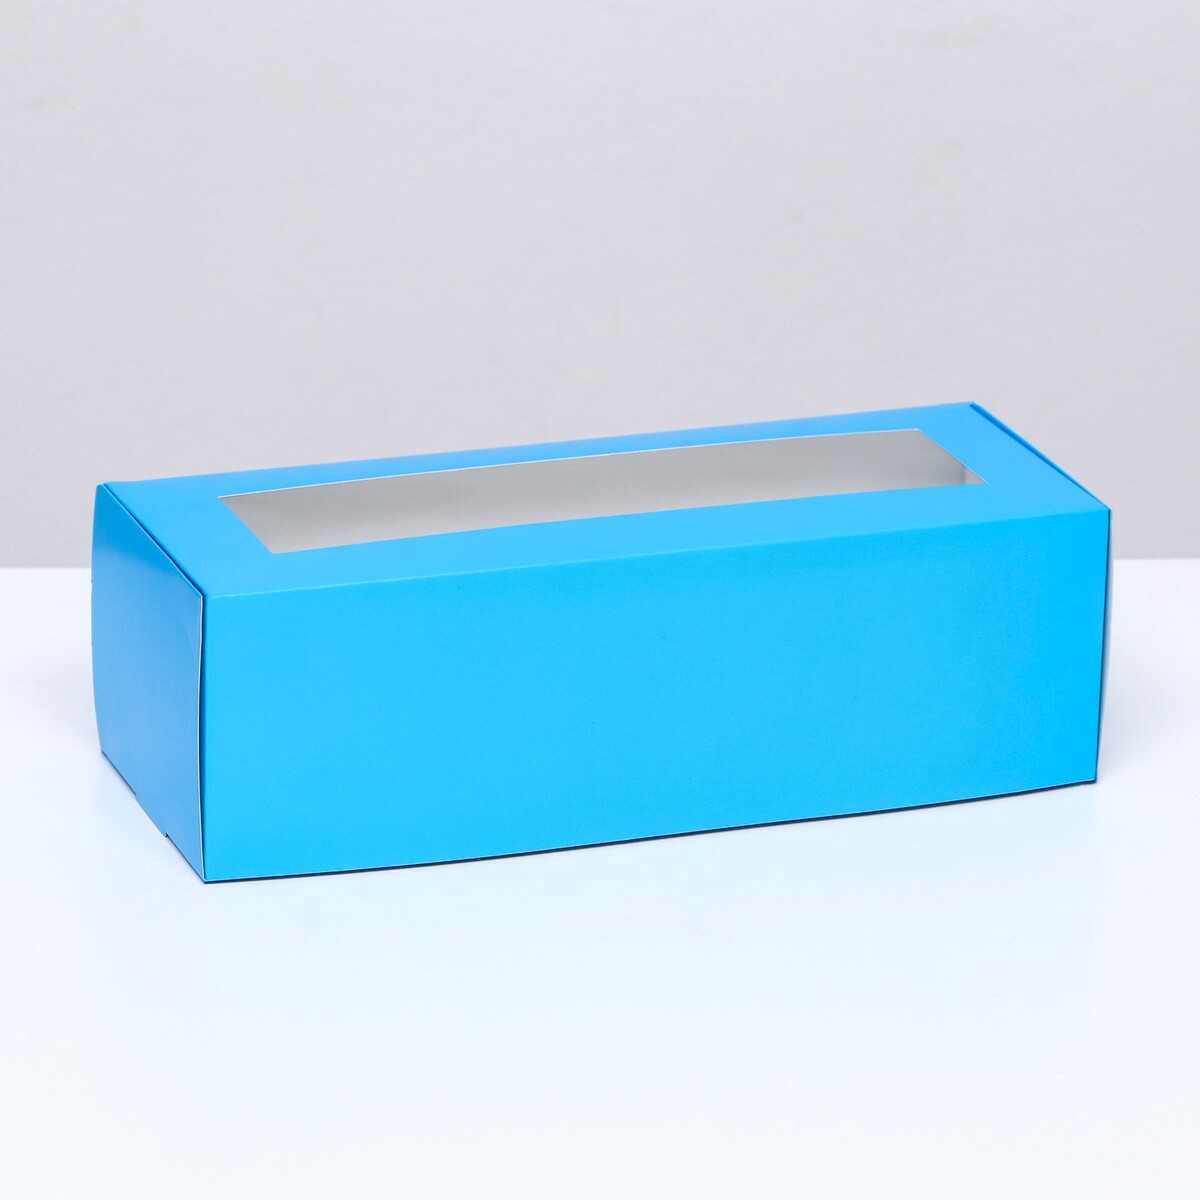 Коробка складная с окном под рулет, голубая, 26 х 10 х 8 см коробка под рулет с ручками белая 27 5 х 11 х 10 см